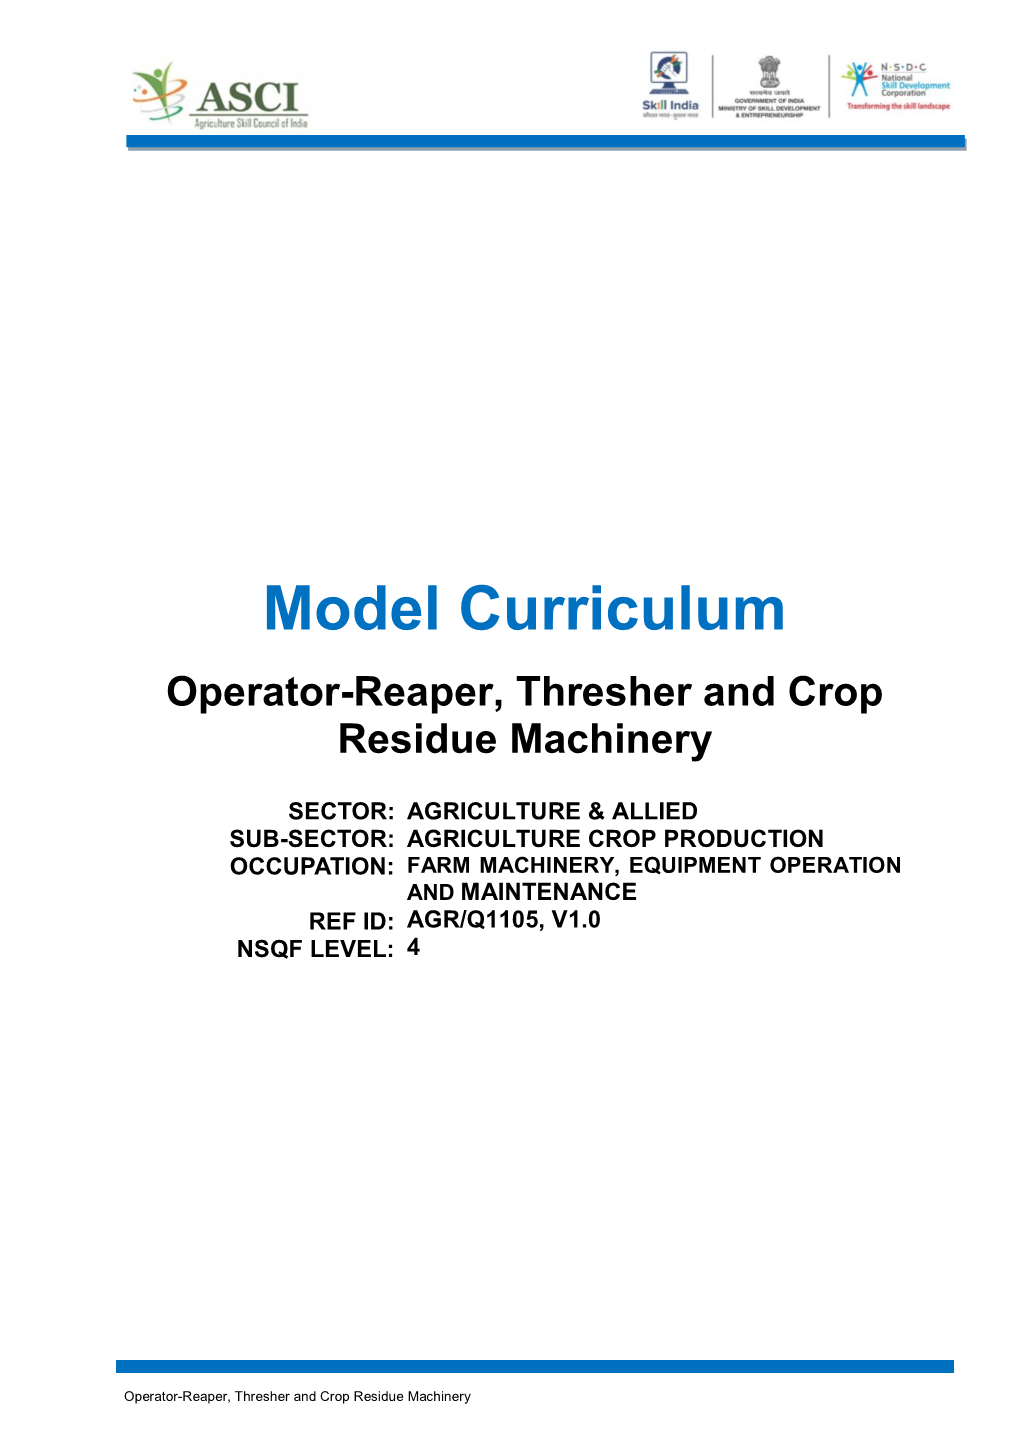 Model Curriculum-Operator- Reaper, Thresher & Crop Residue Machinery